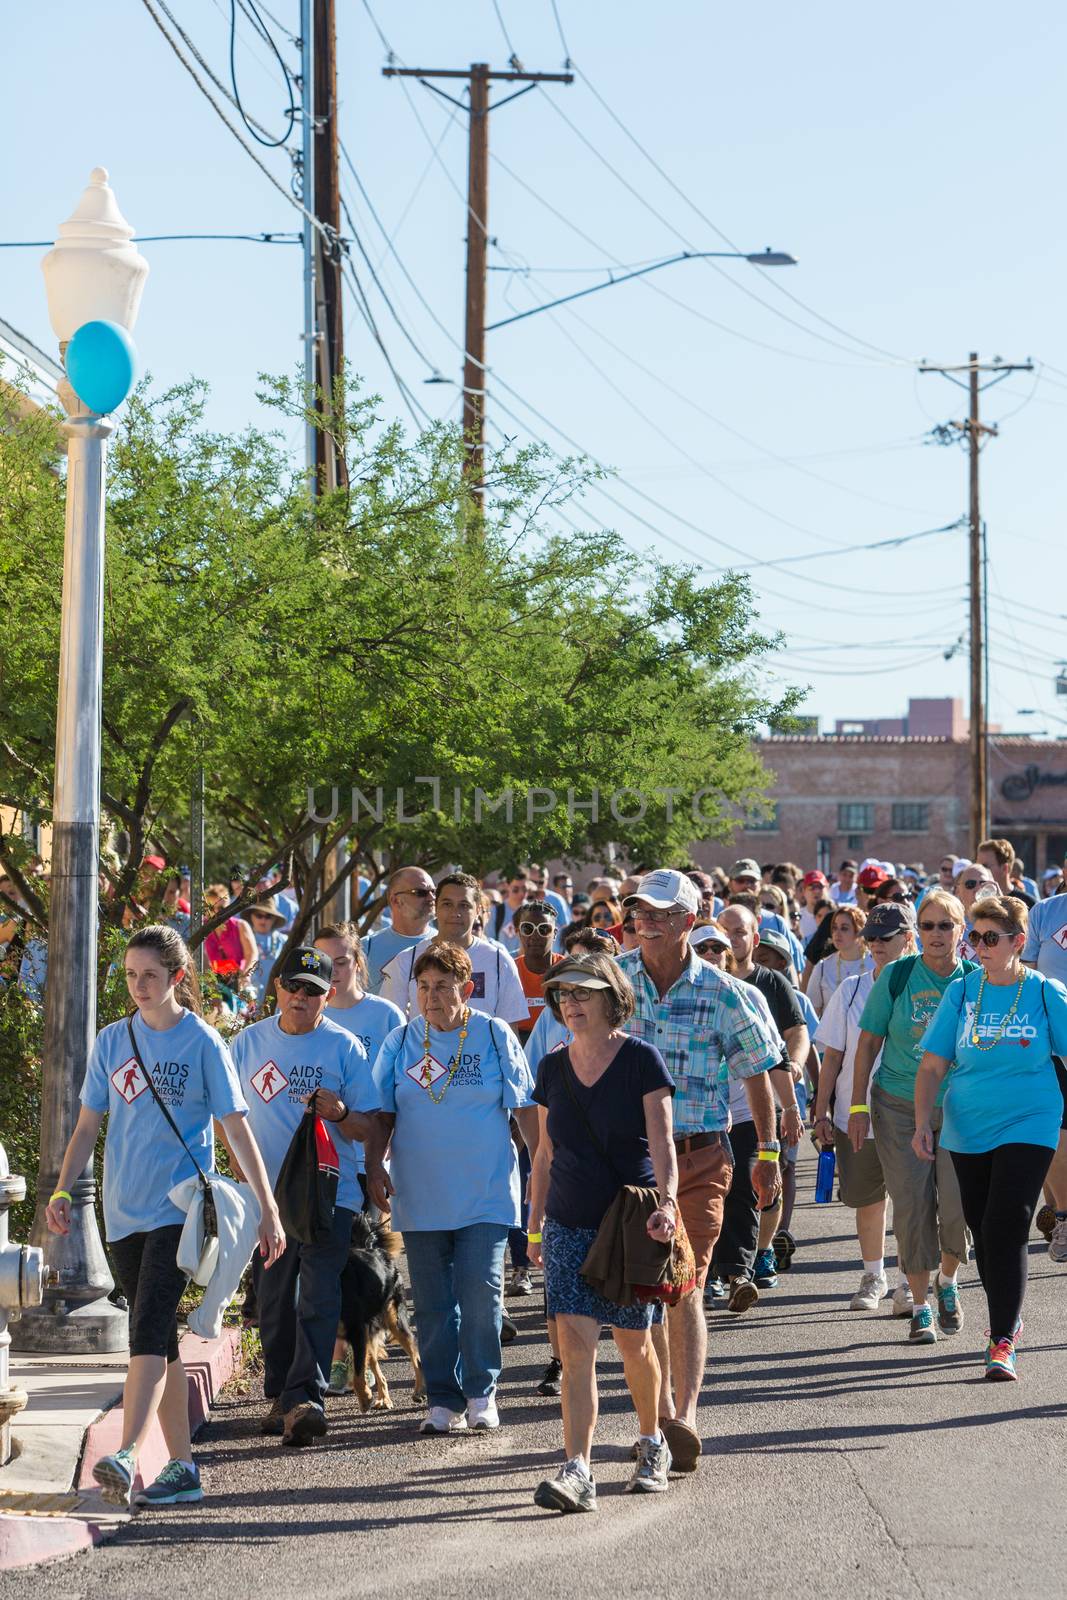 TUCSON, AZ/USA - OCTOBER 12: Unidentified participants in AIDSwalk on October 12, 2014 in Tucson, Arizona, USA.